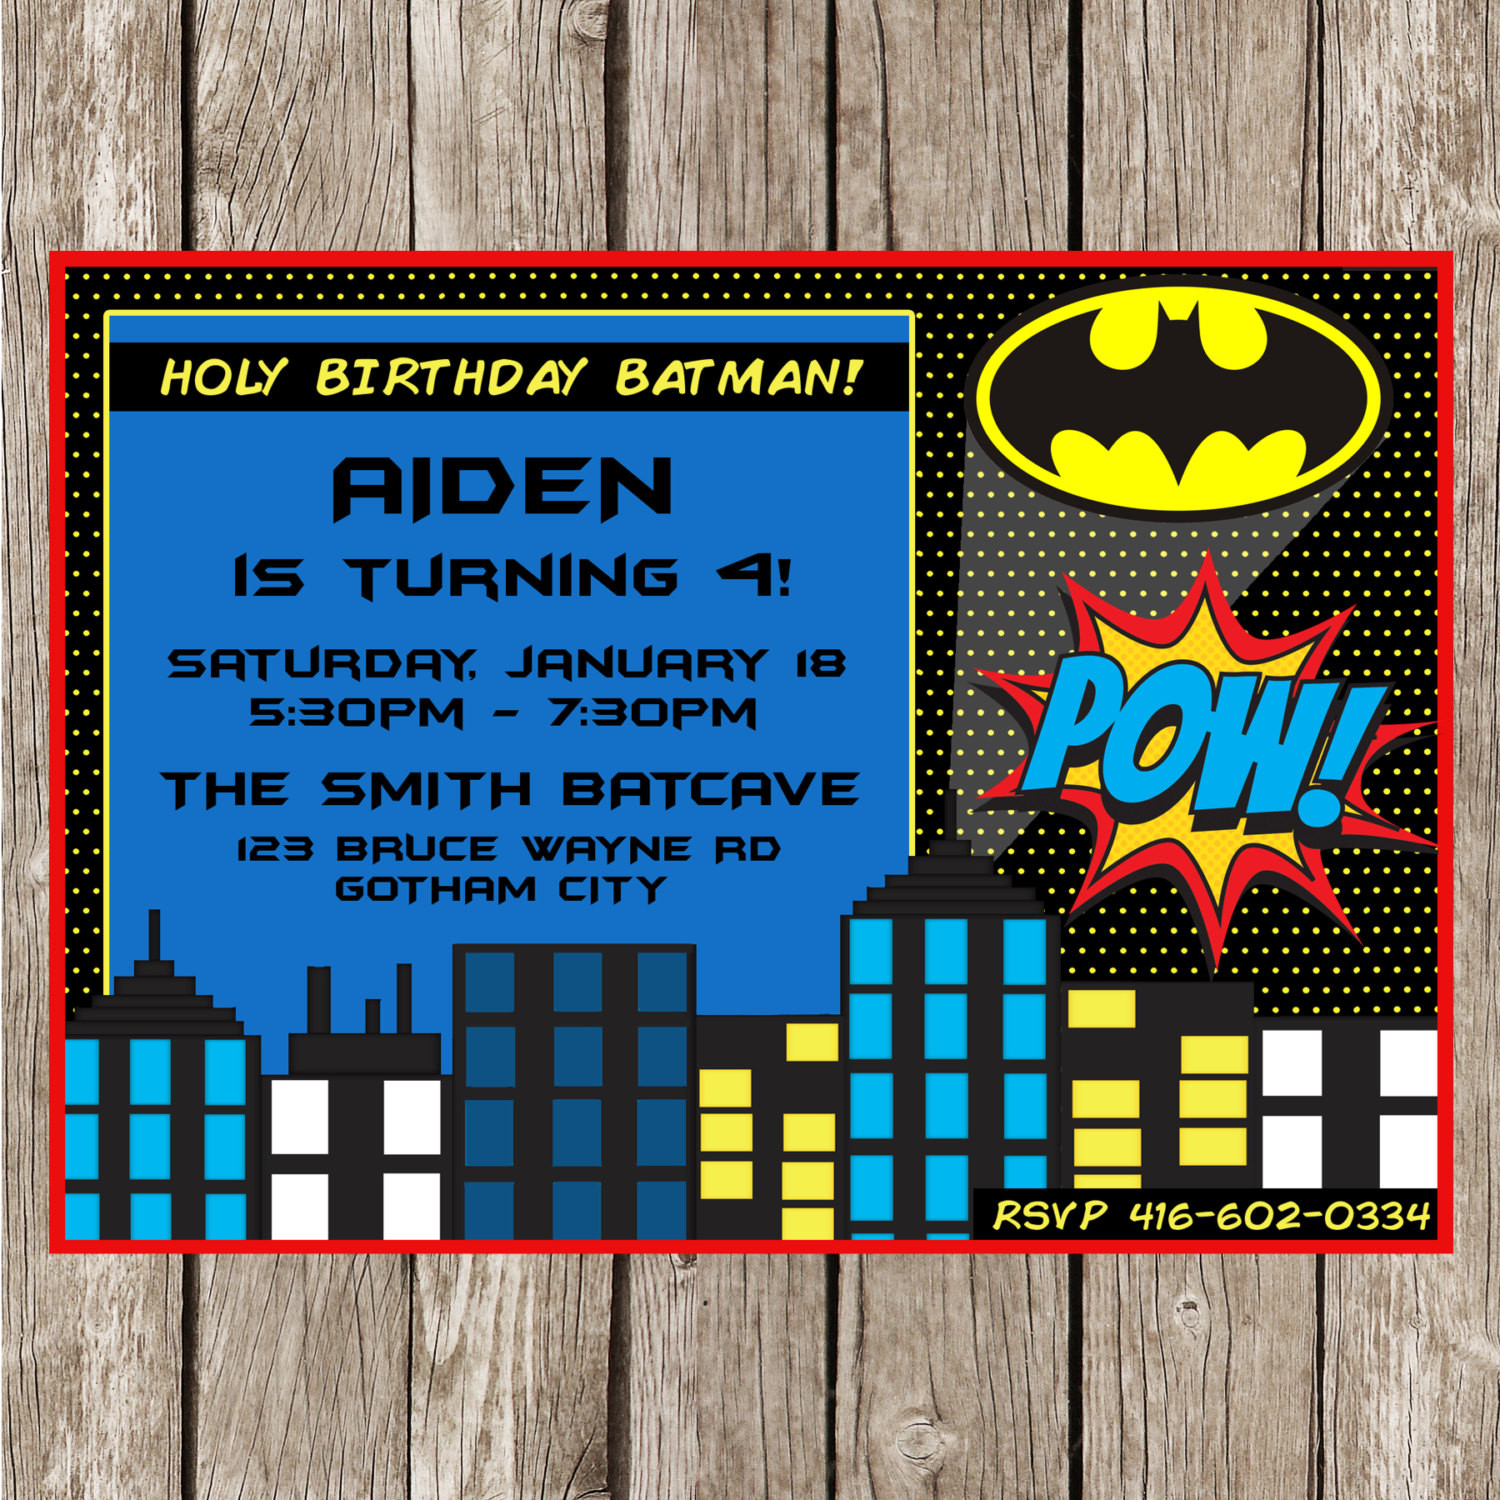 Best ideas about Batman Birthday Invitations
. Save or Pin Retro Batman POW Birthday Invitation Batman SuperHero Now.